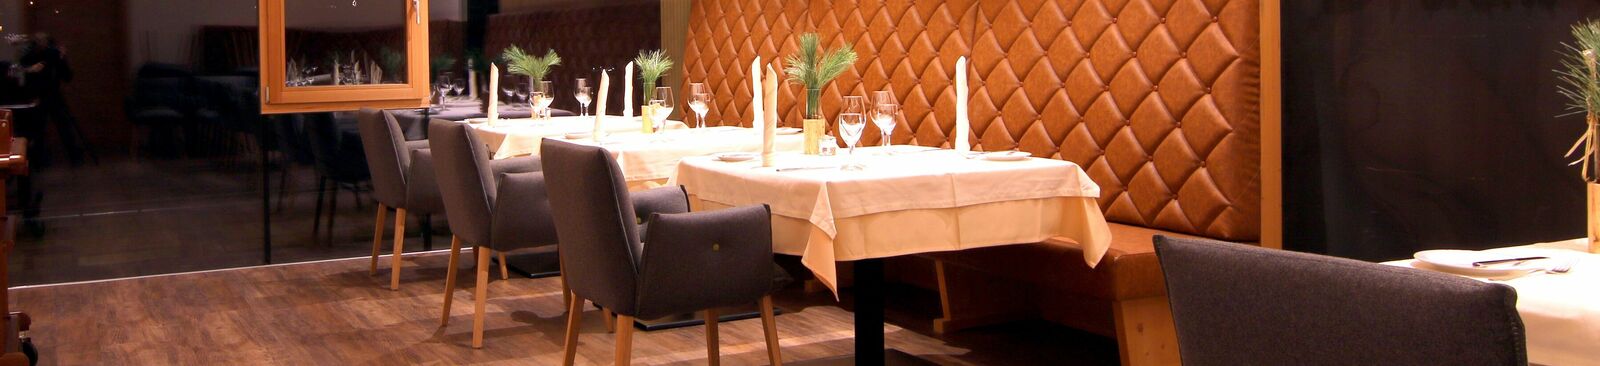 Gourmetrestaurant Inside im Naturhotel Outside in Osttirol